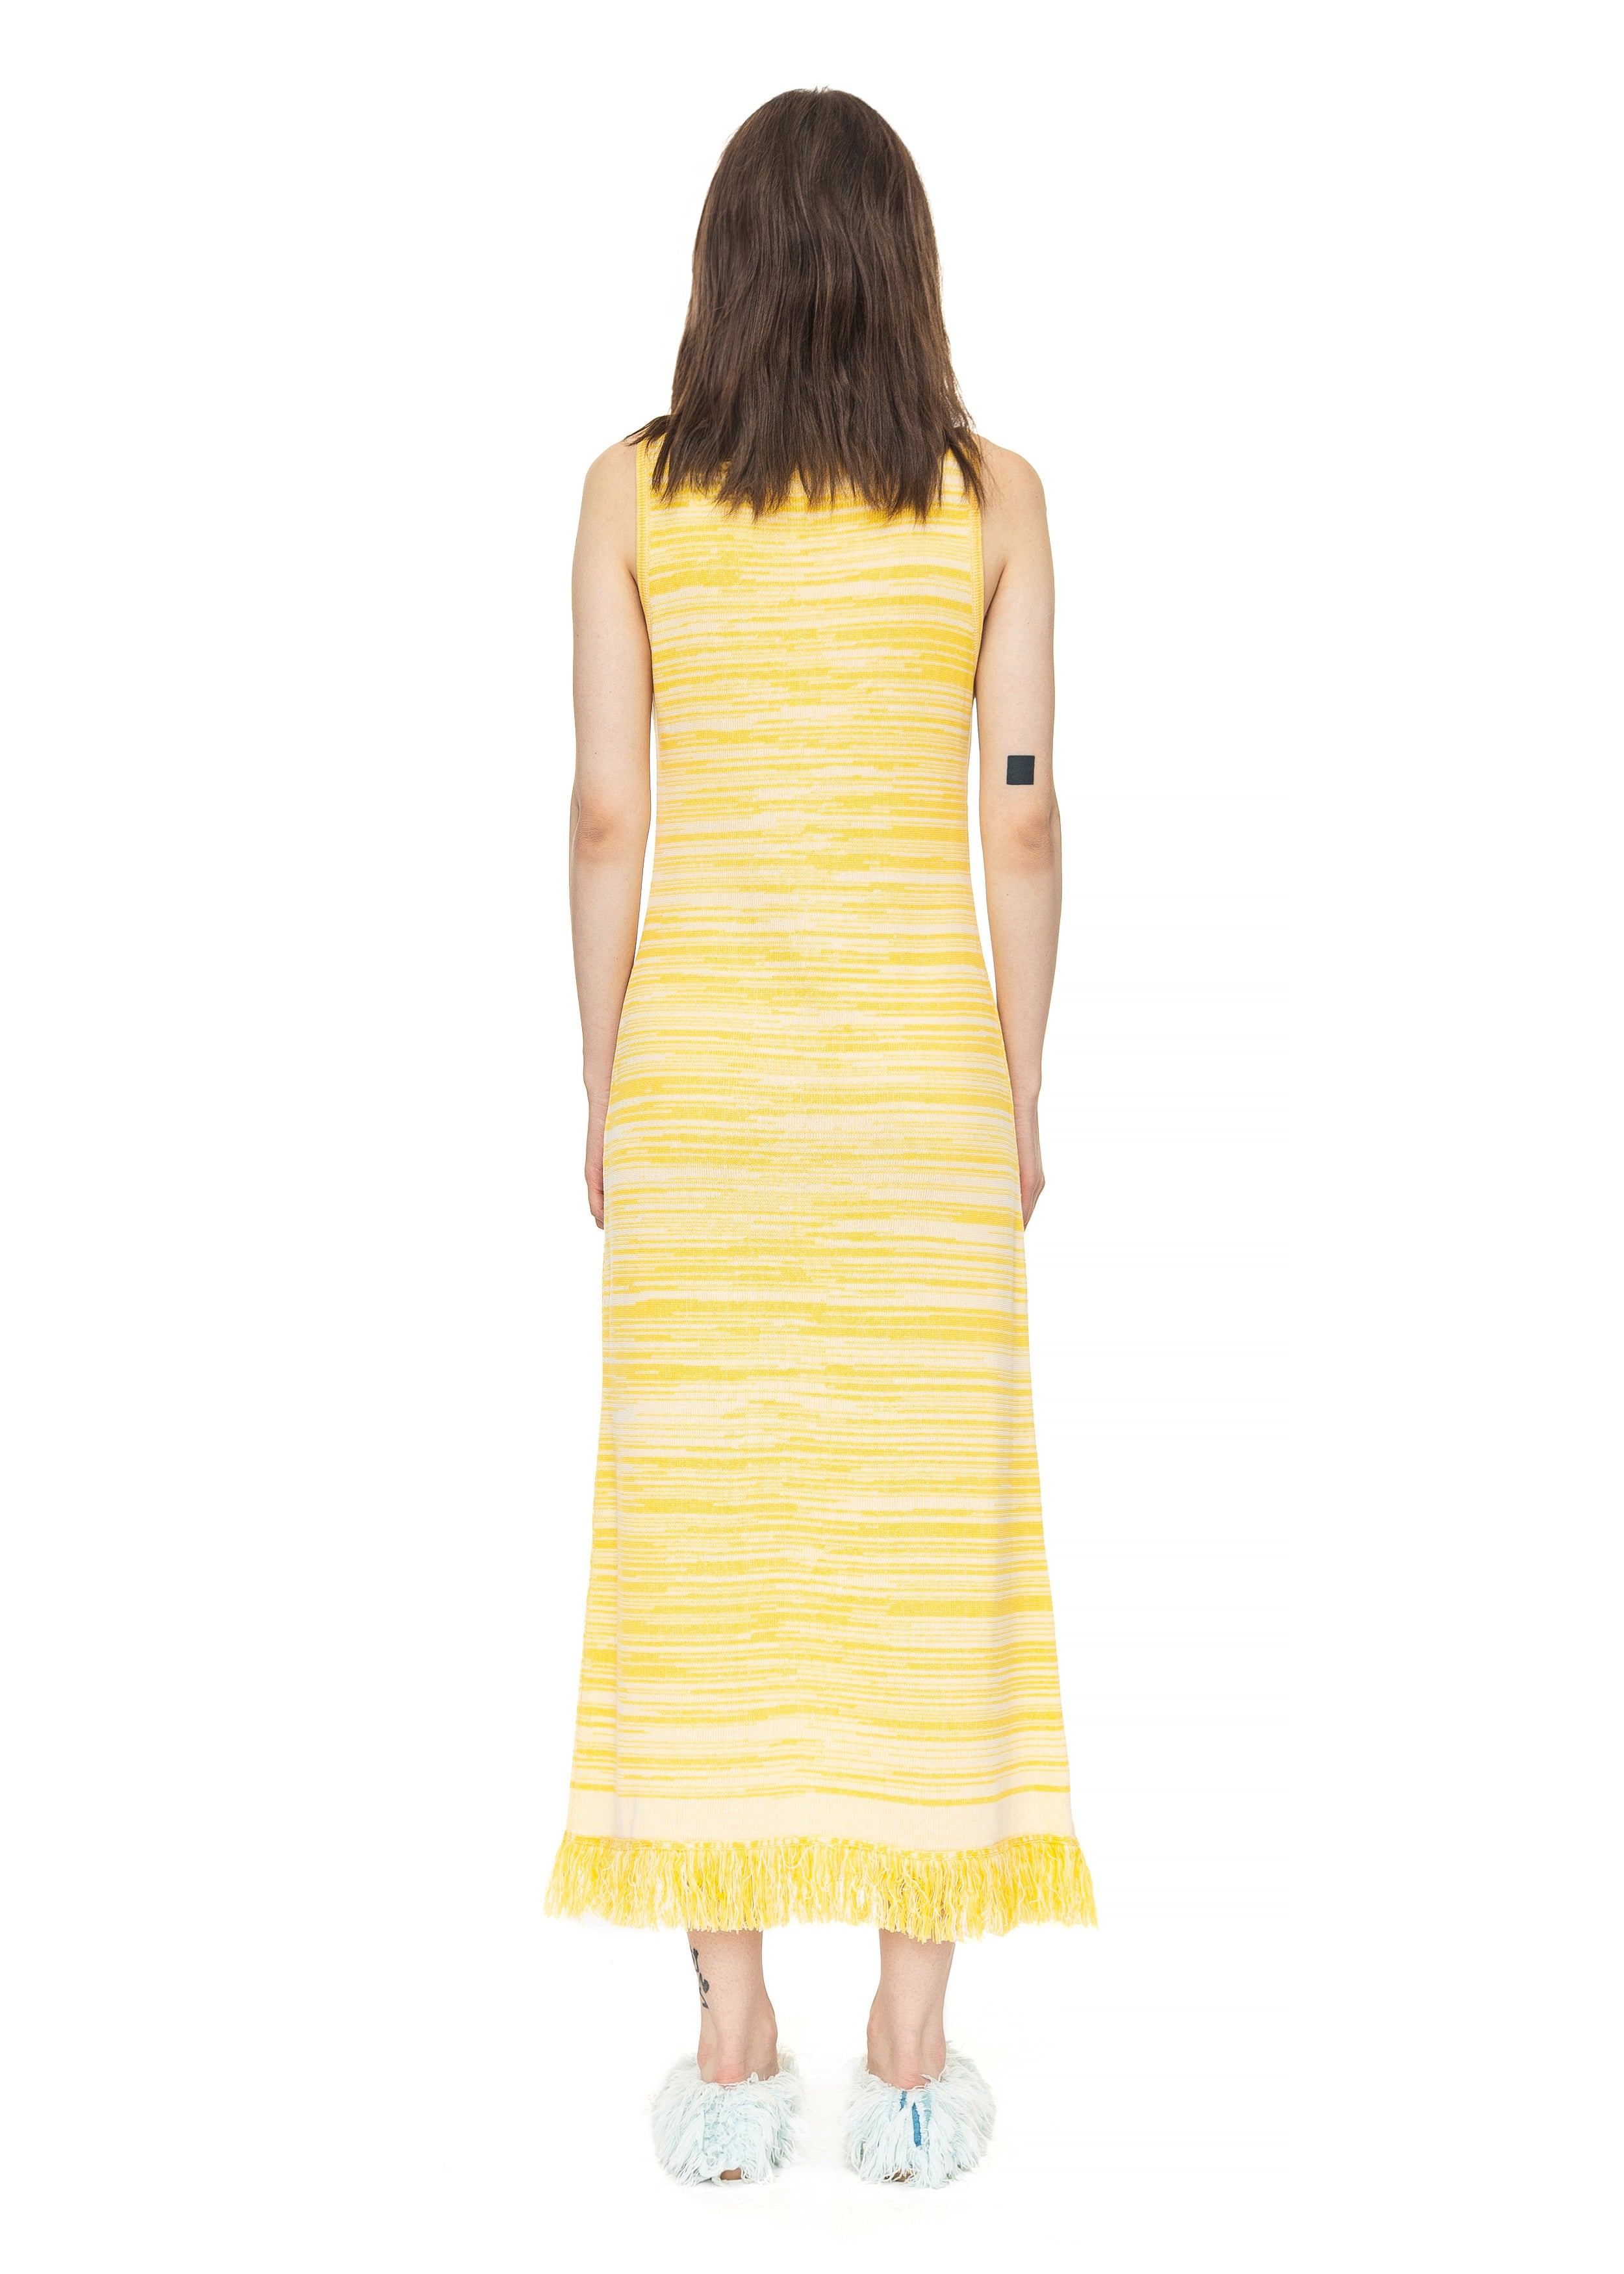 Yellow Knitted Dress image